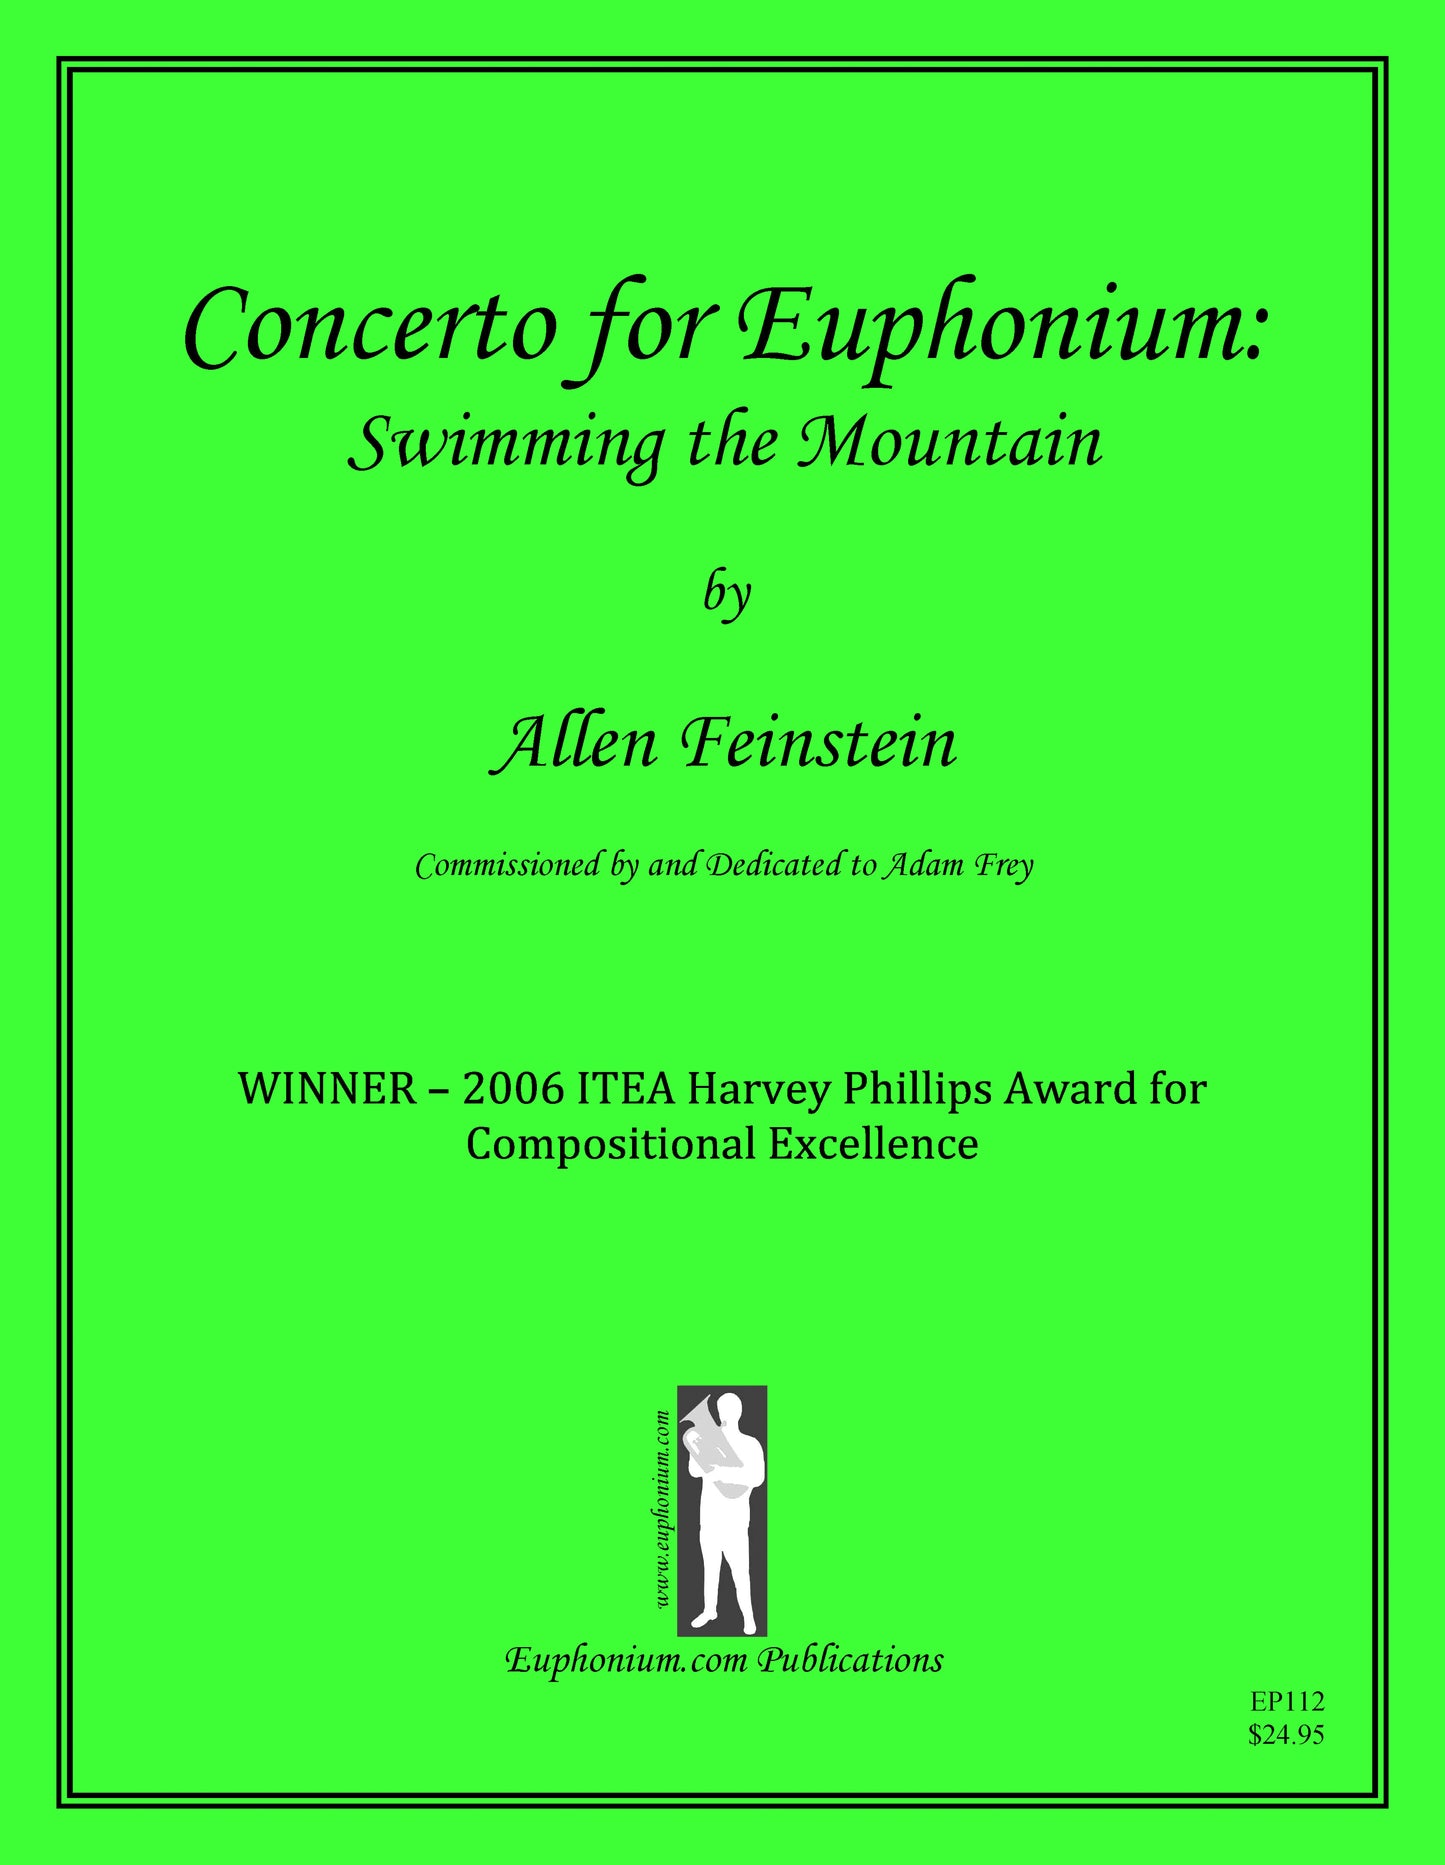 Feinstein, Allen - Concerto for Euphonium - 2nd Mvt Eclipse